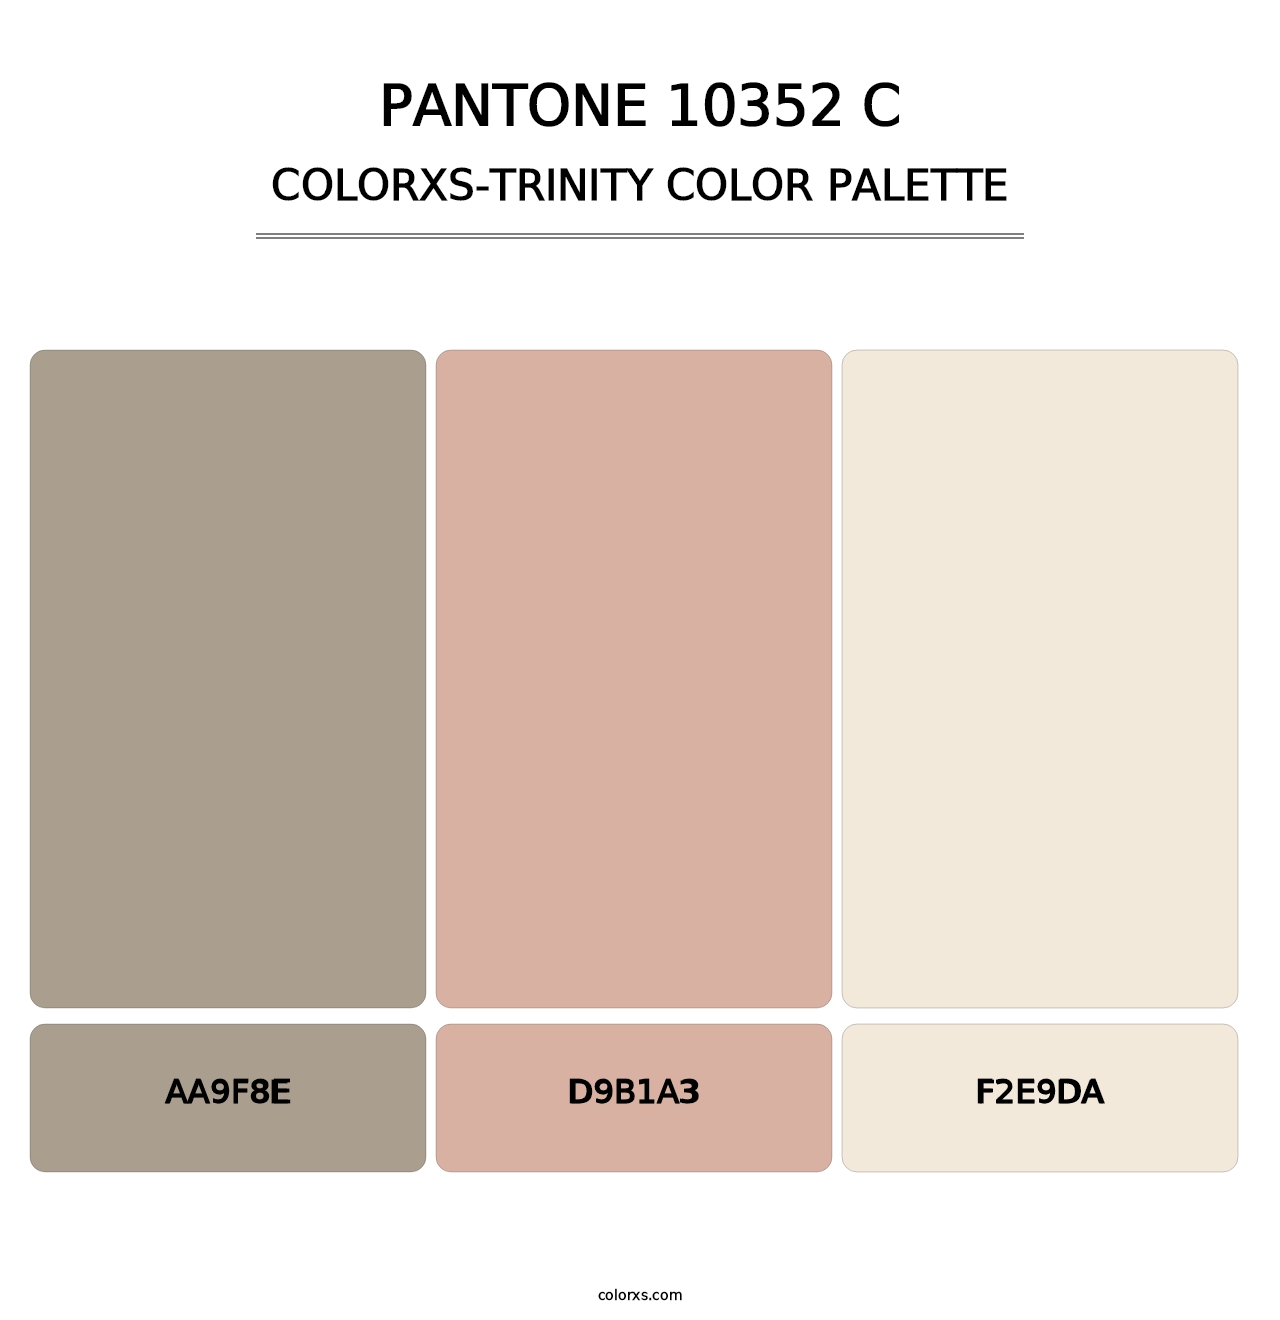 PANTONE 10352 C - Colorxs Trinity Palette